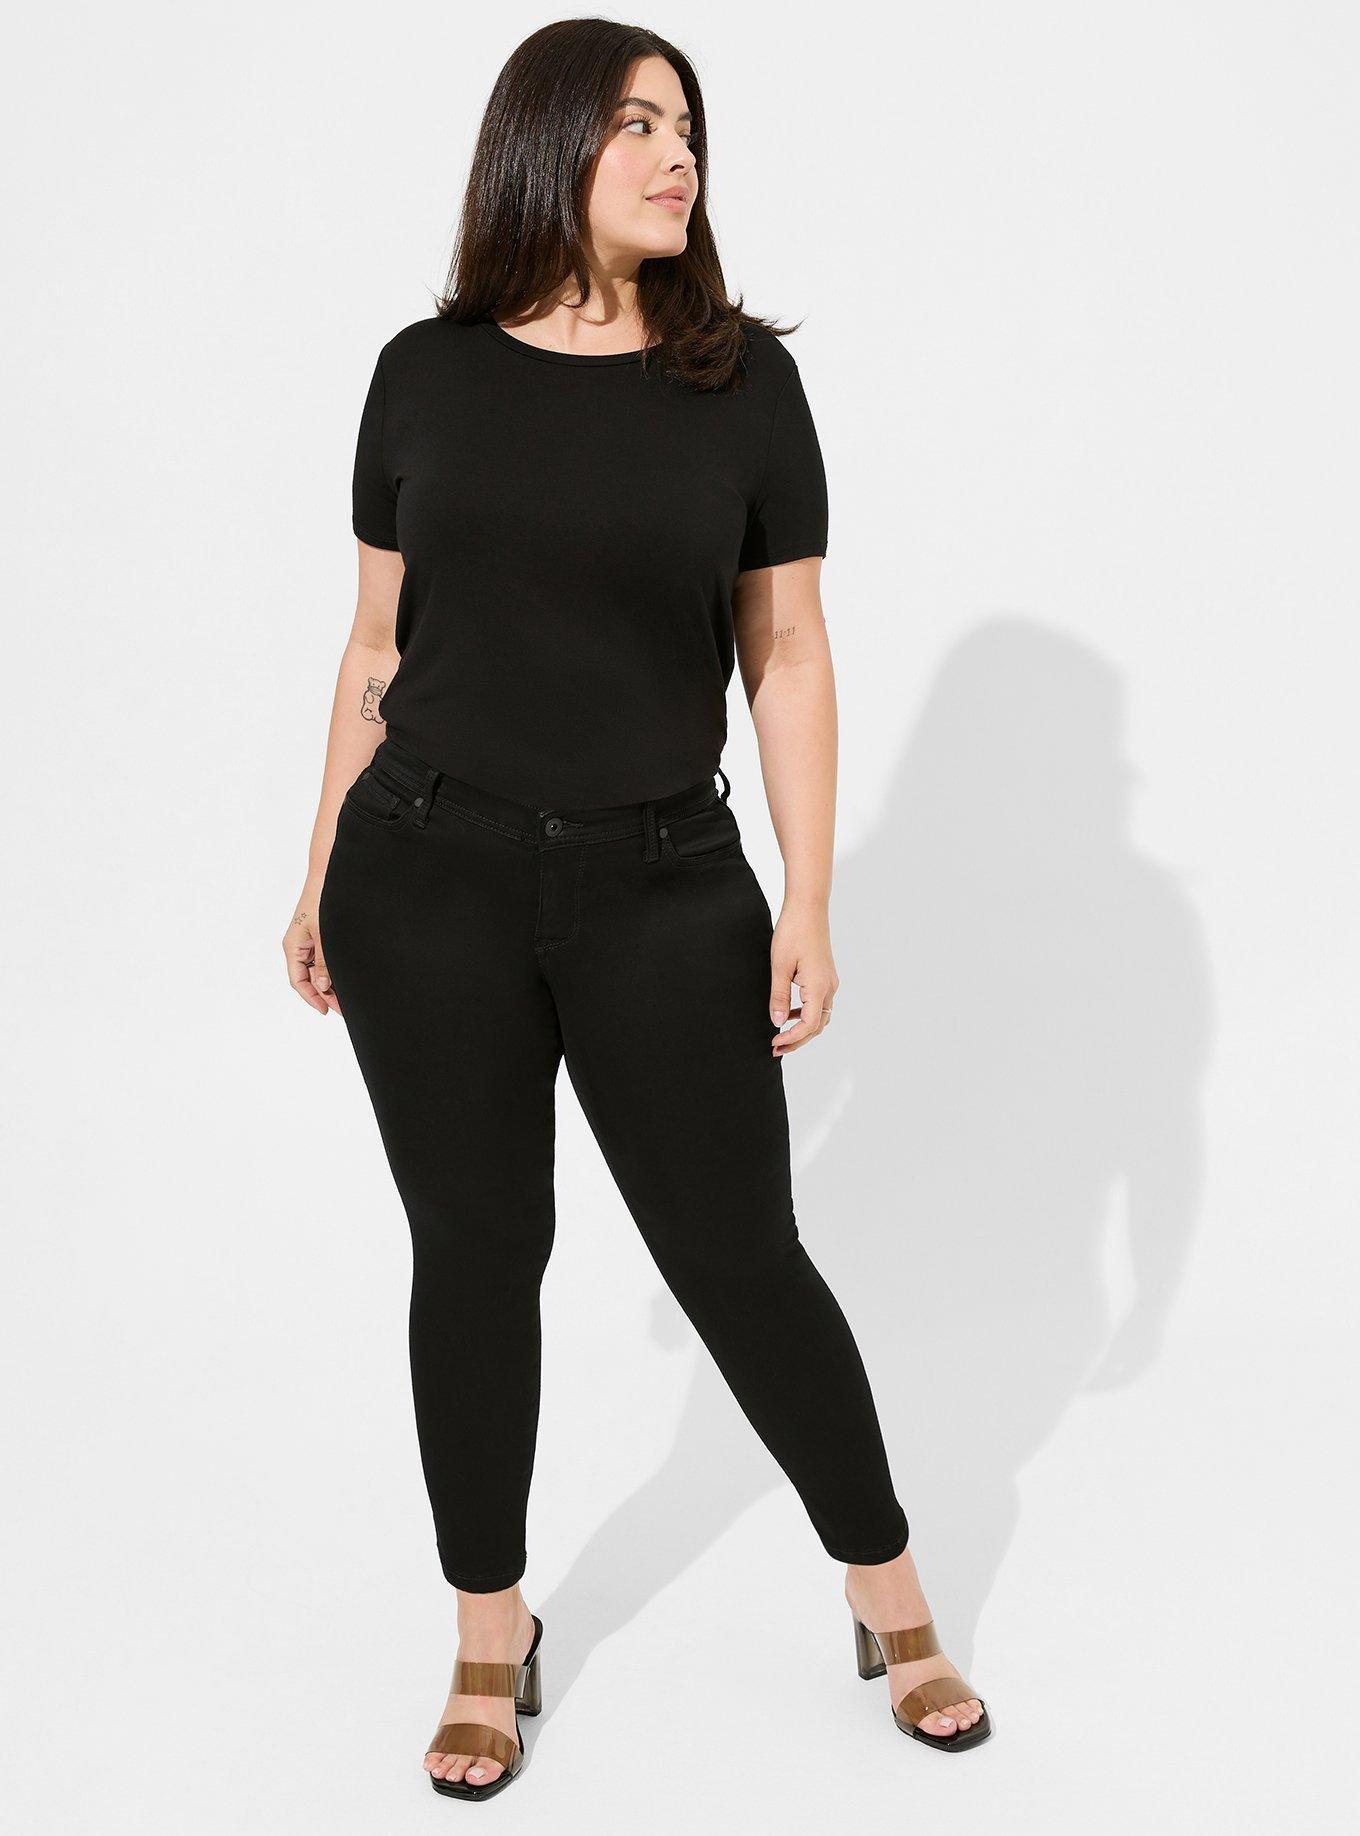 Women's Black High Waist Slim Fit Stretchy Skinny Work Pants - G-Line